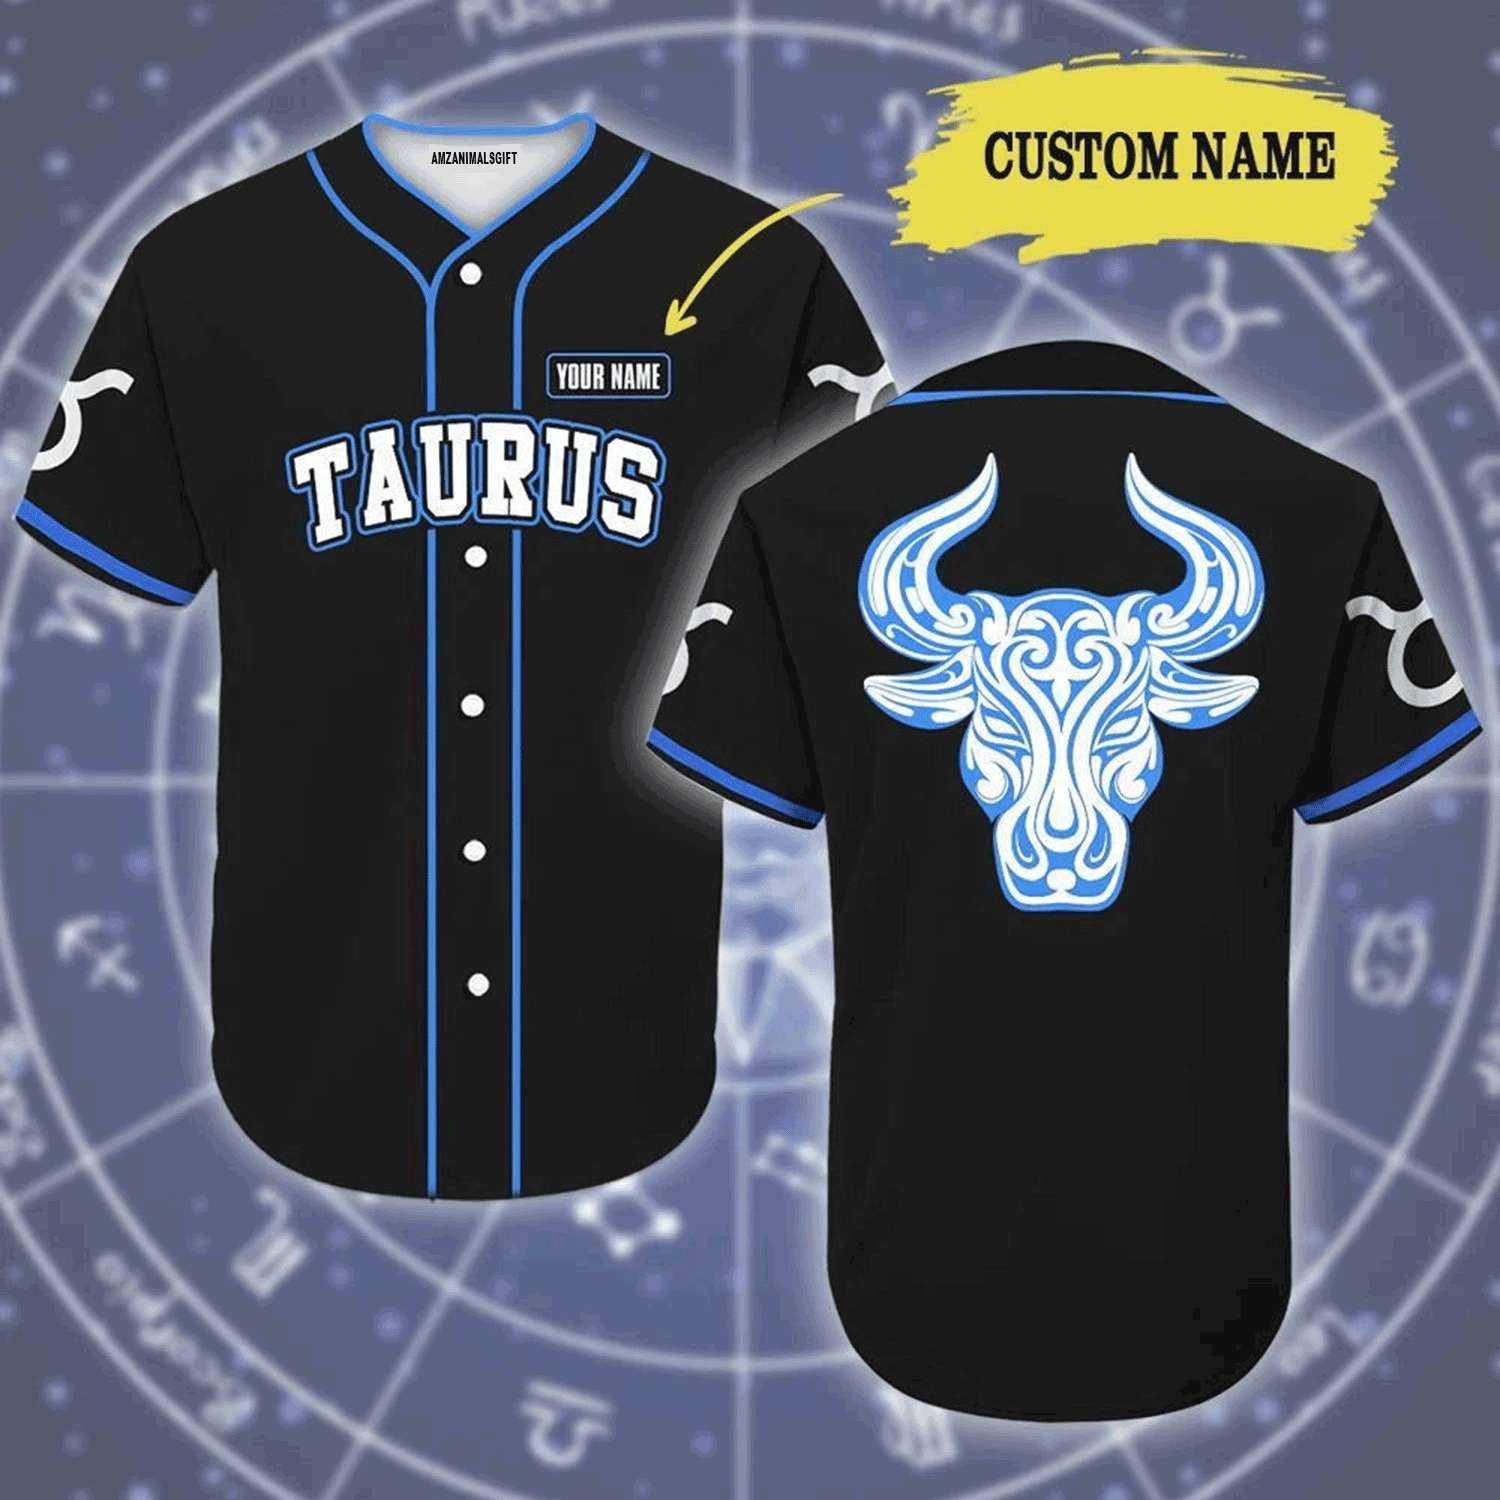 Customized Baseball Jersey Shirt - Personalized Name Taurus Appealing Zodiac Baseball Jersey Shirt For Men & Women, Perfect Gift For Taurus Zodiac